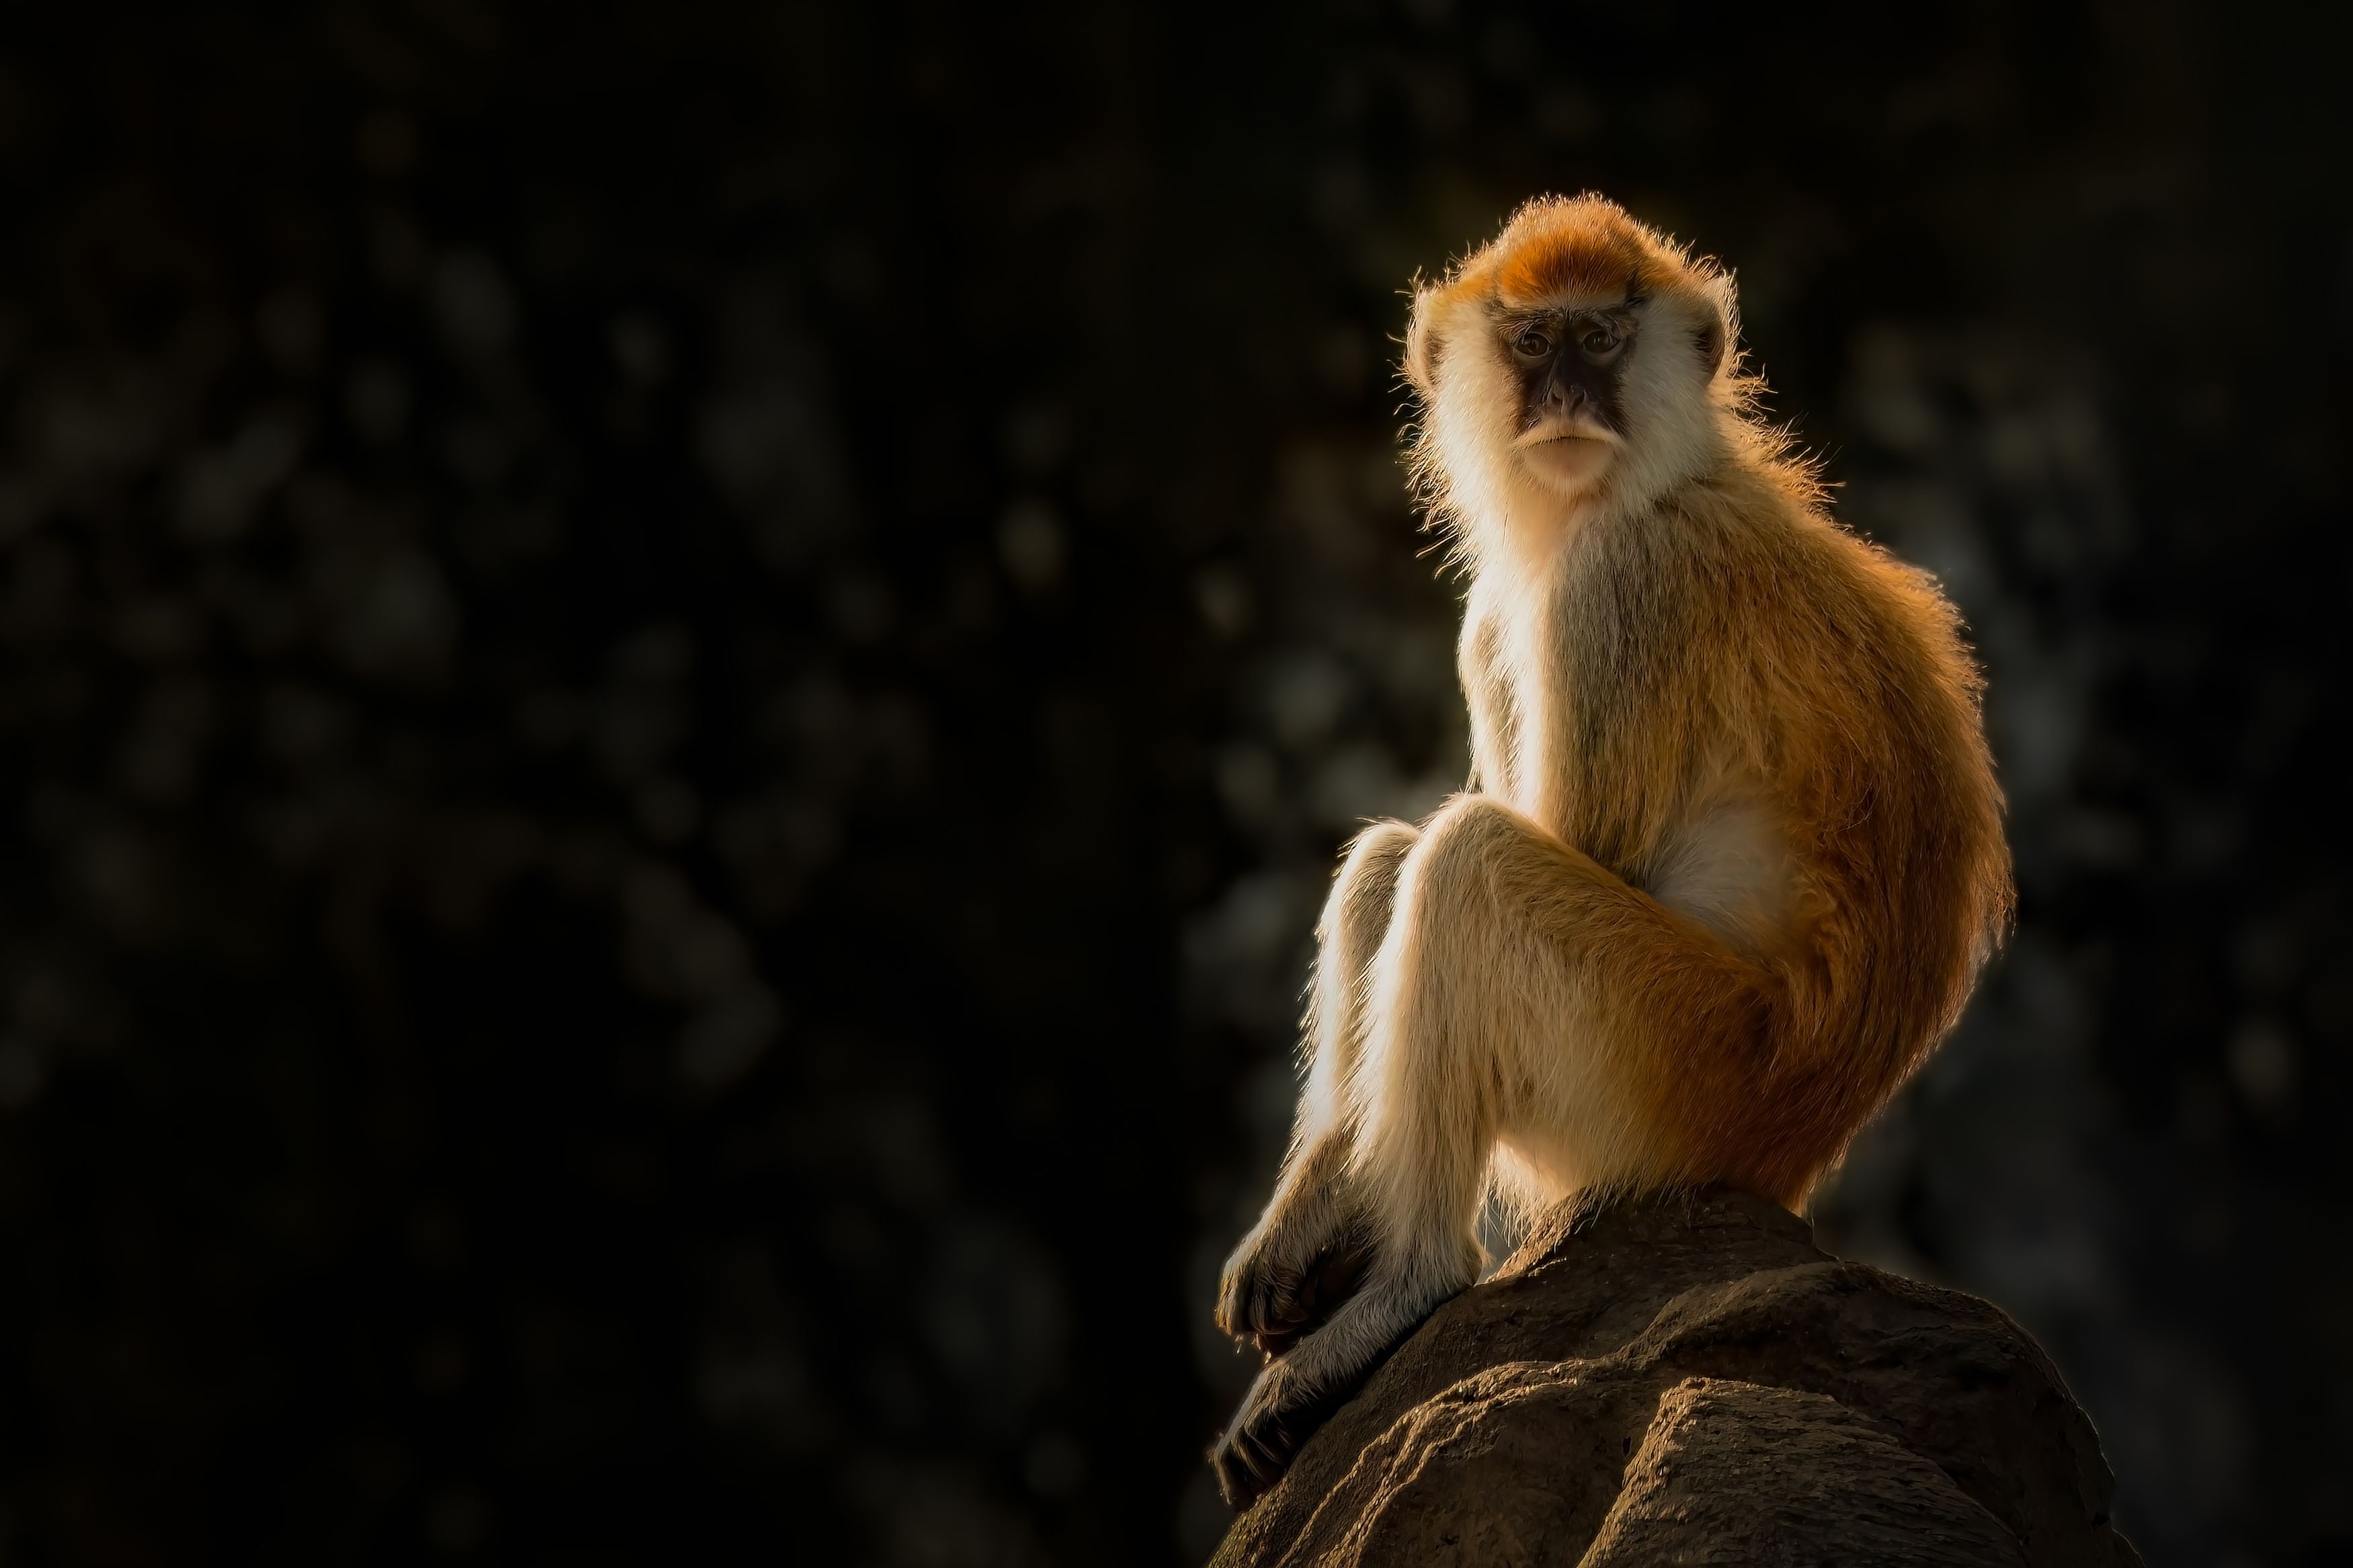 patas monkey, monkey, sunset, sunrise, animals, animal, sun, close-up, sunny, closeup, day, Ahmed Zaeitar